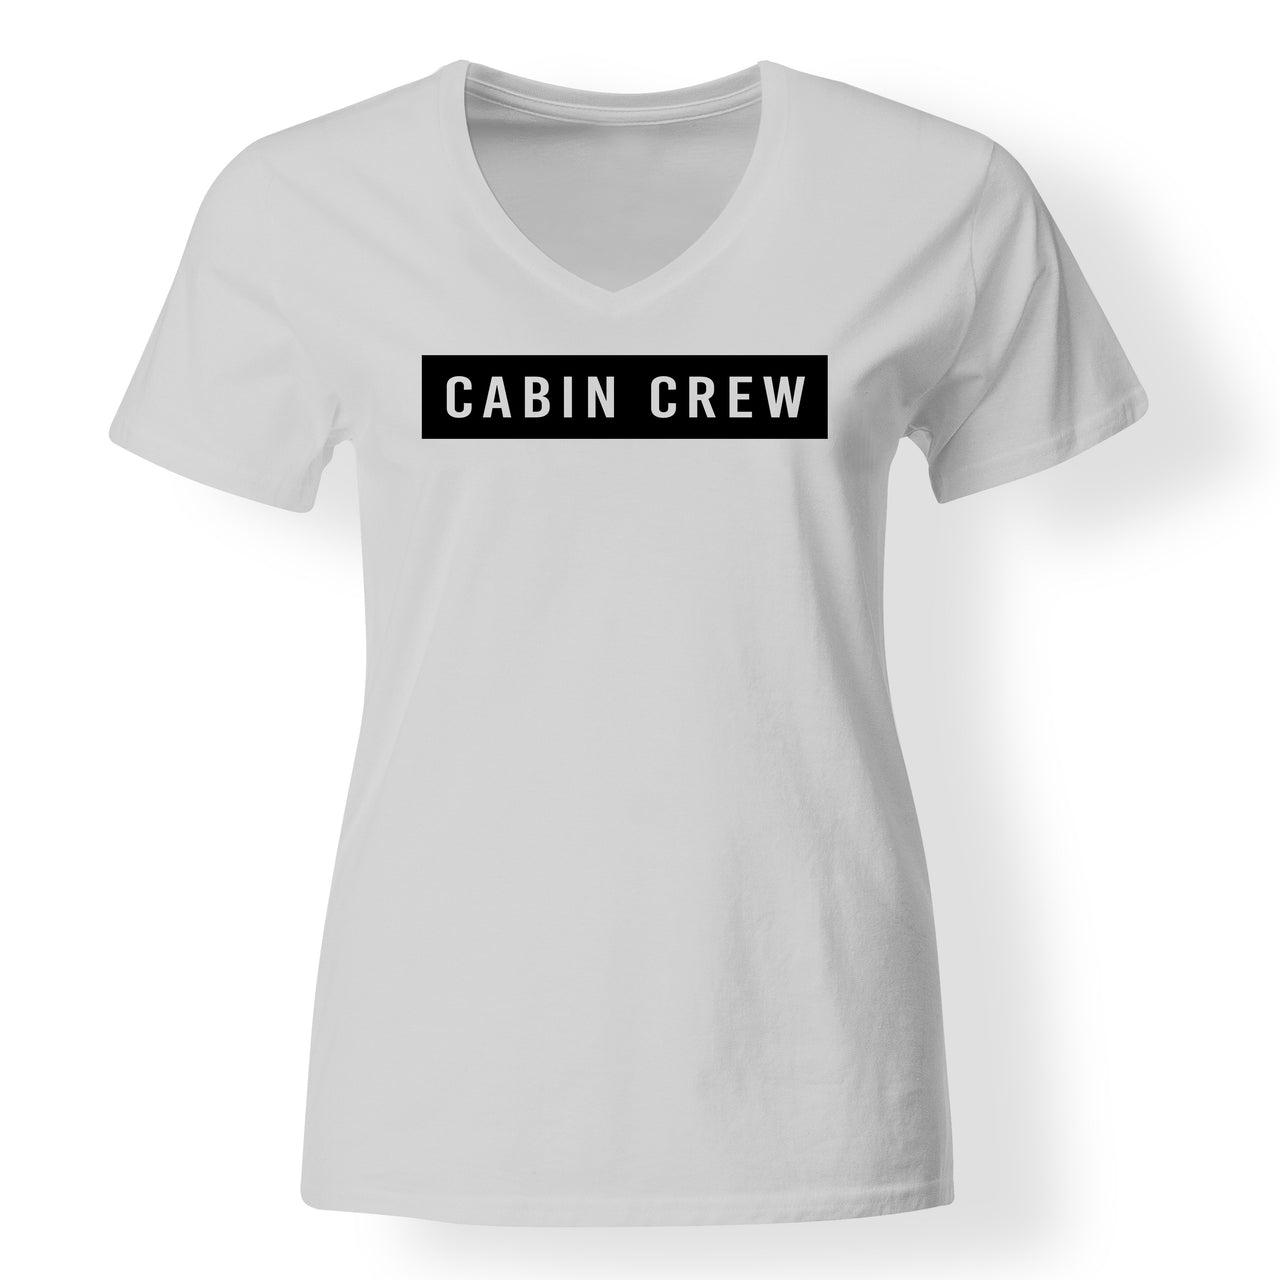 Cabin Crew Text Designed V-Neck T-Shirts